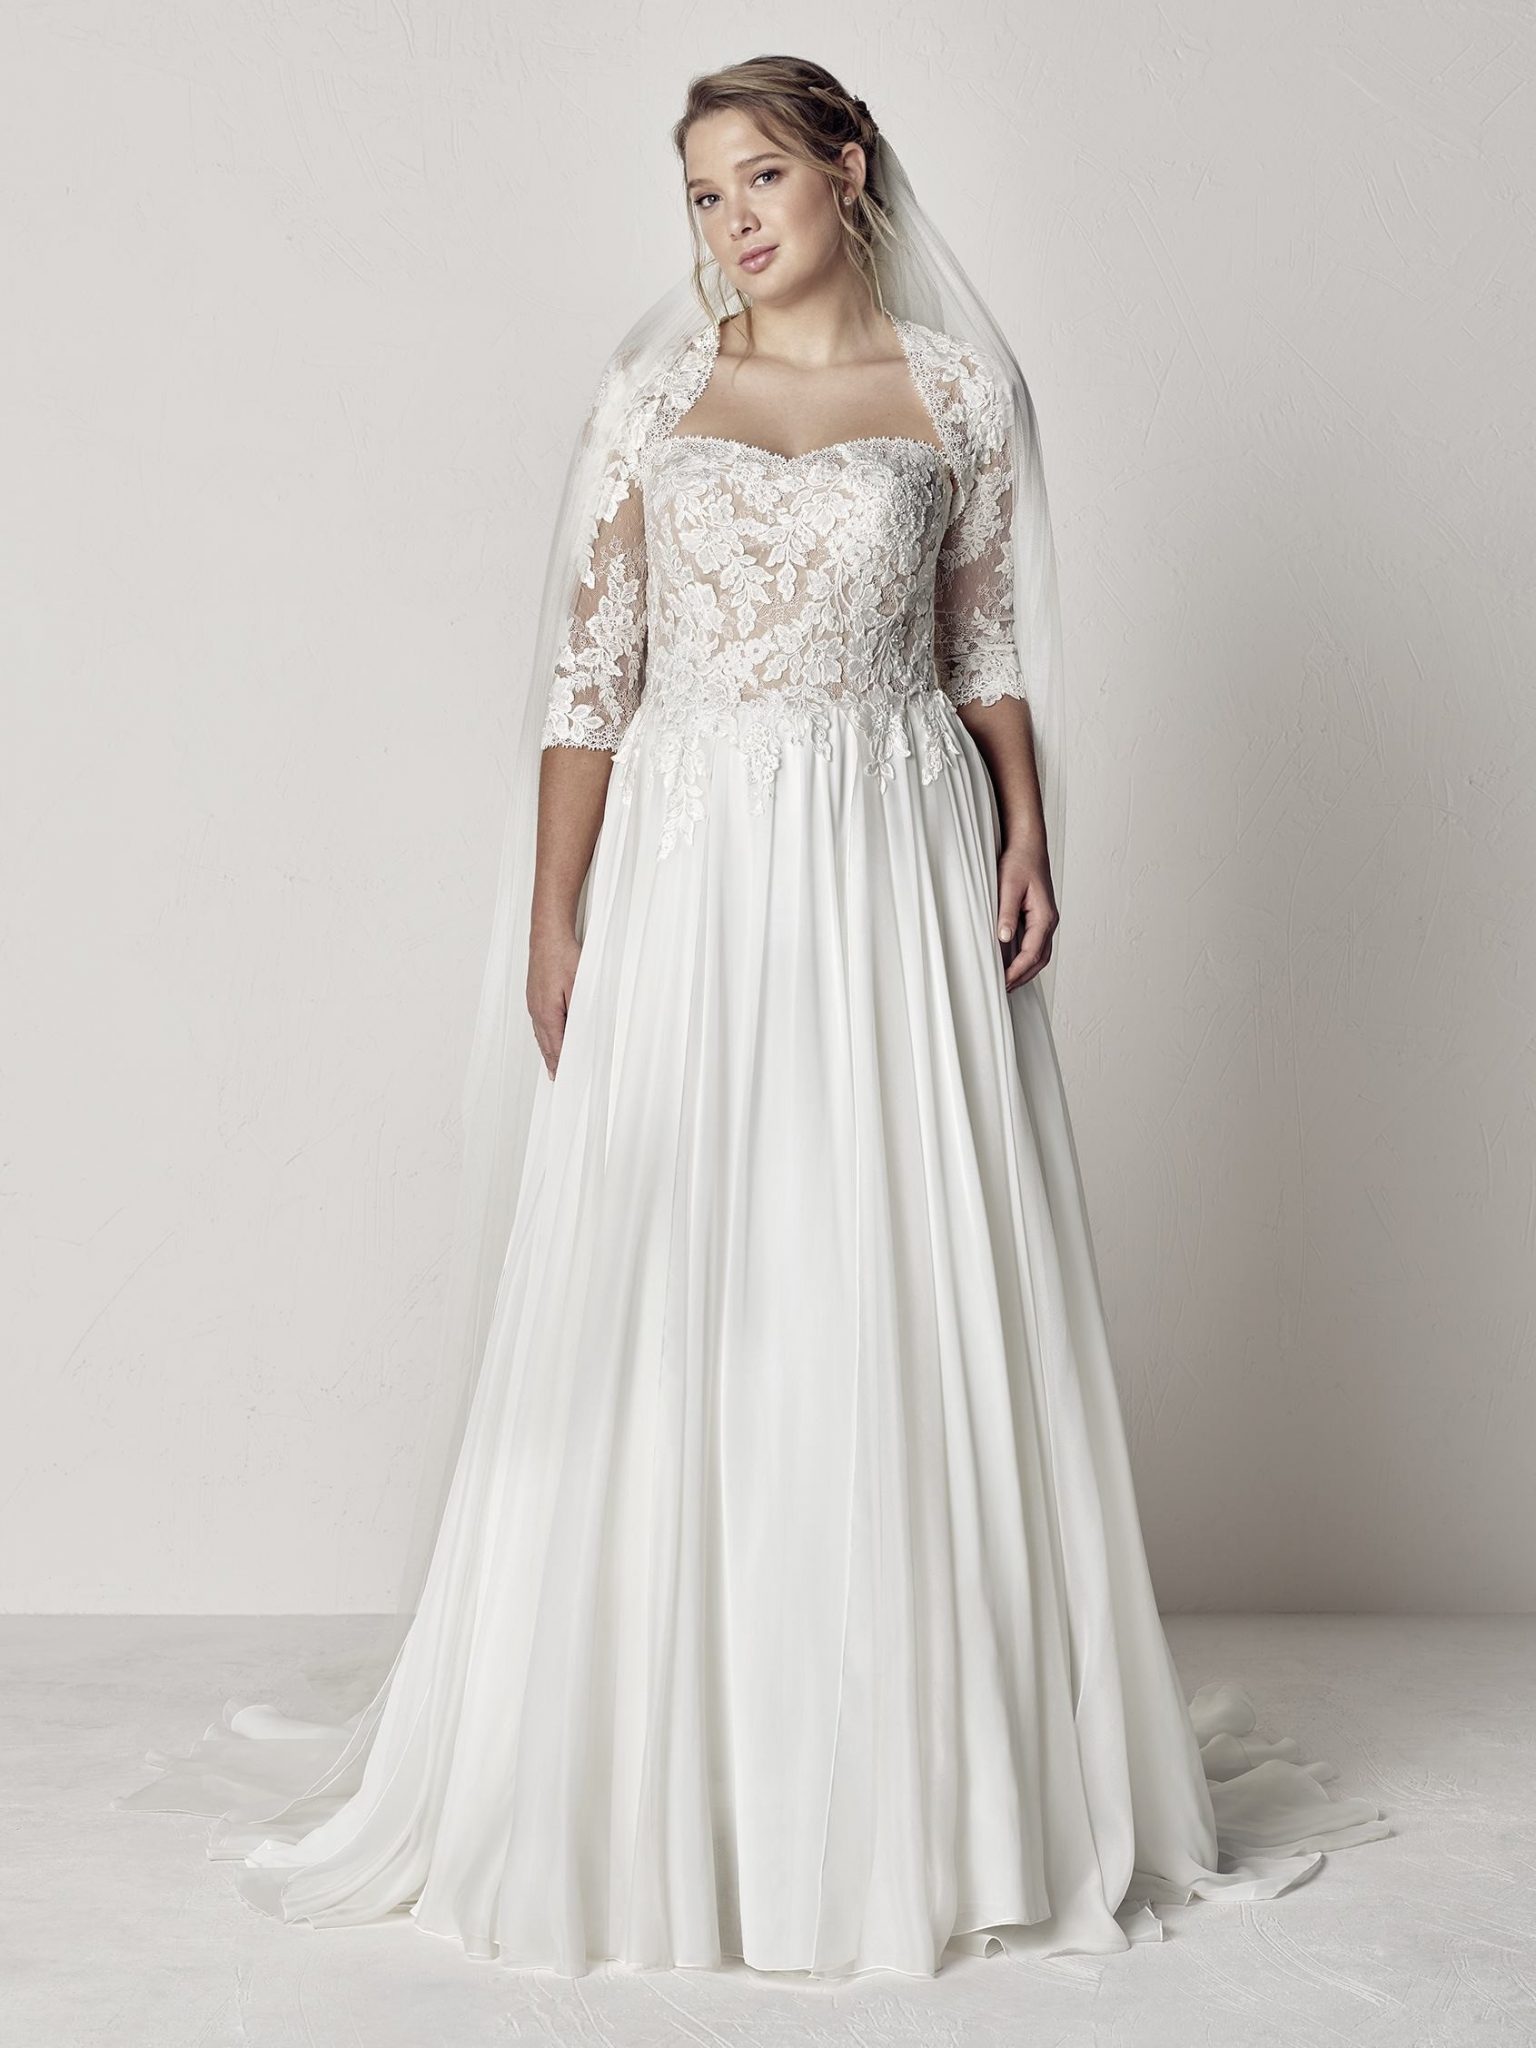 Stunning A-line plus size wedding gown Modes Bridal NZ